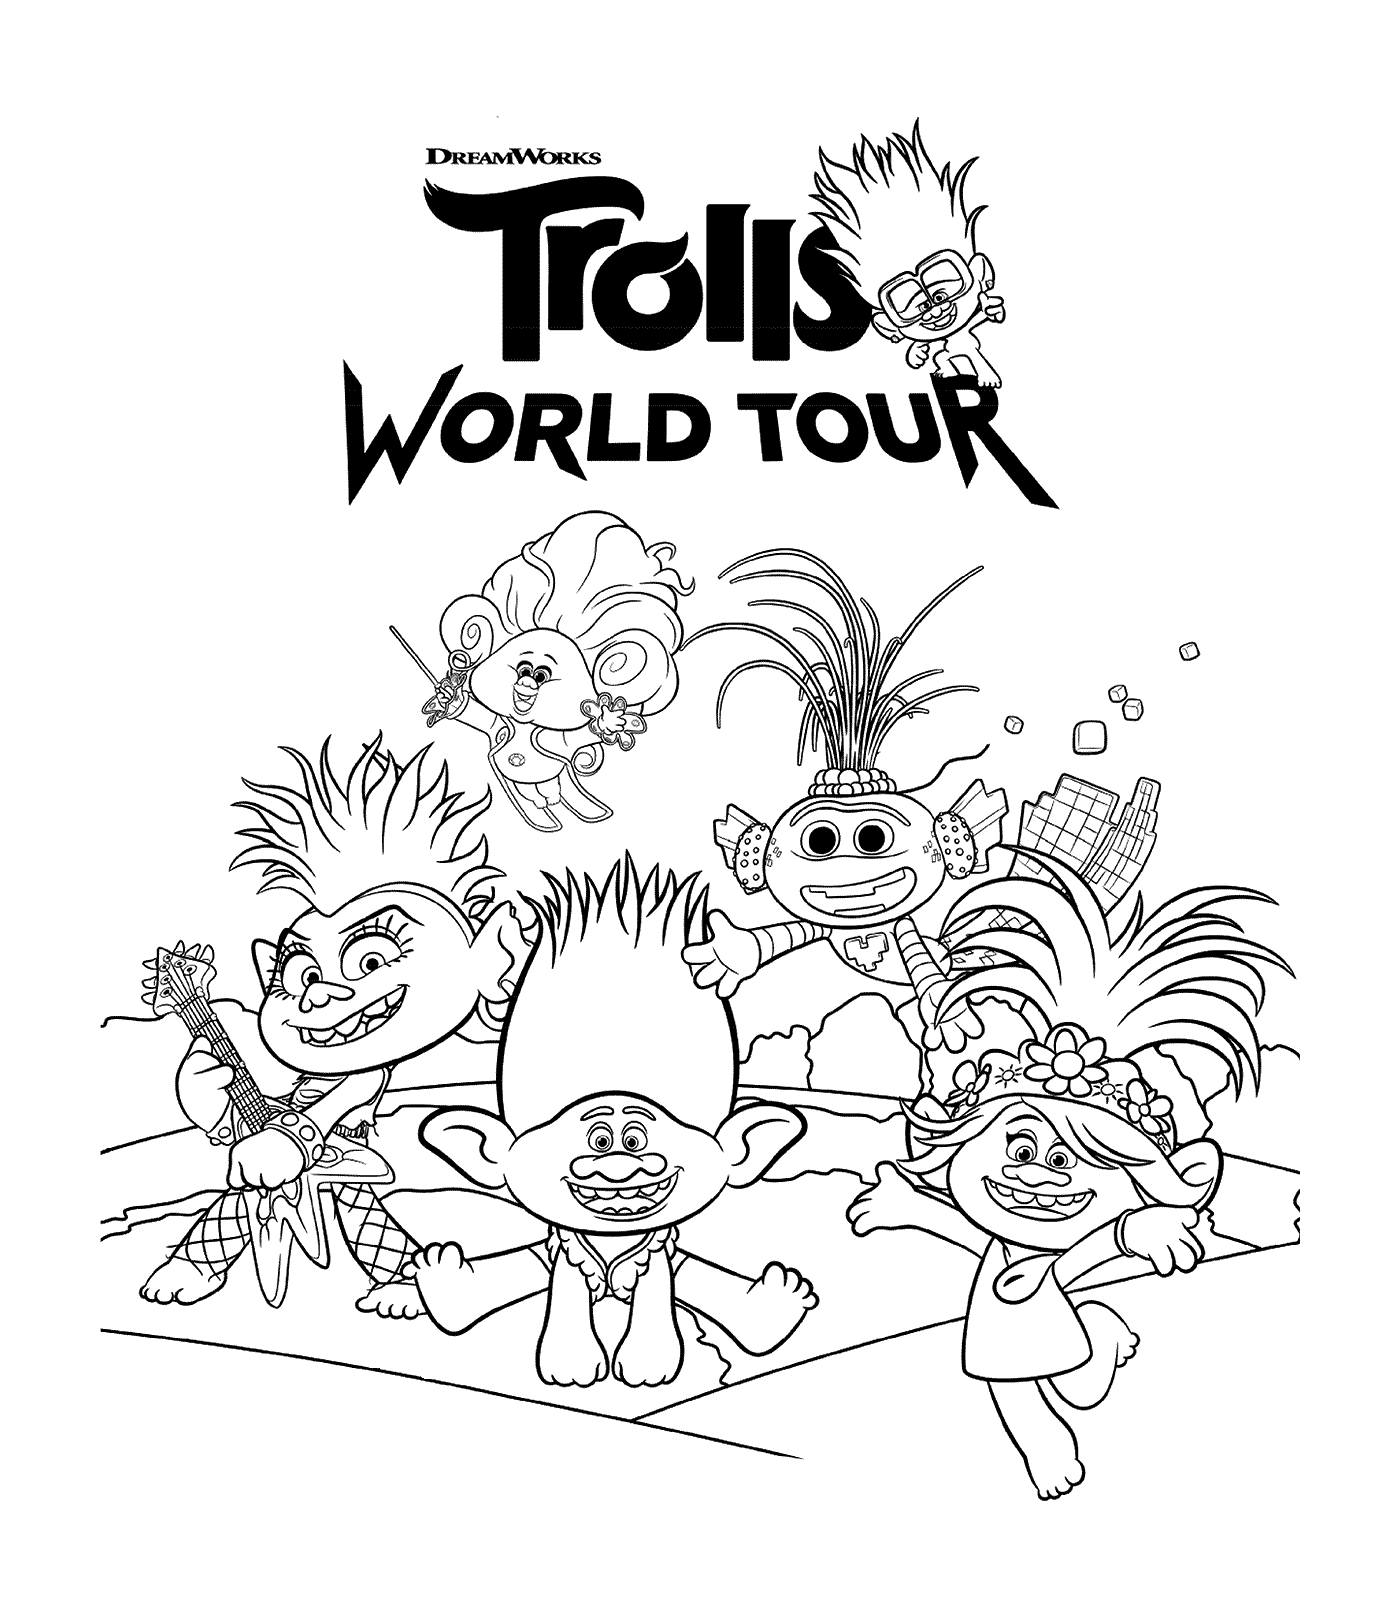  Trolls trolls in DreamWorks Trolls 2 World Tour 